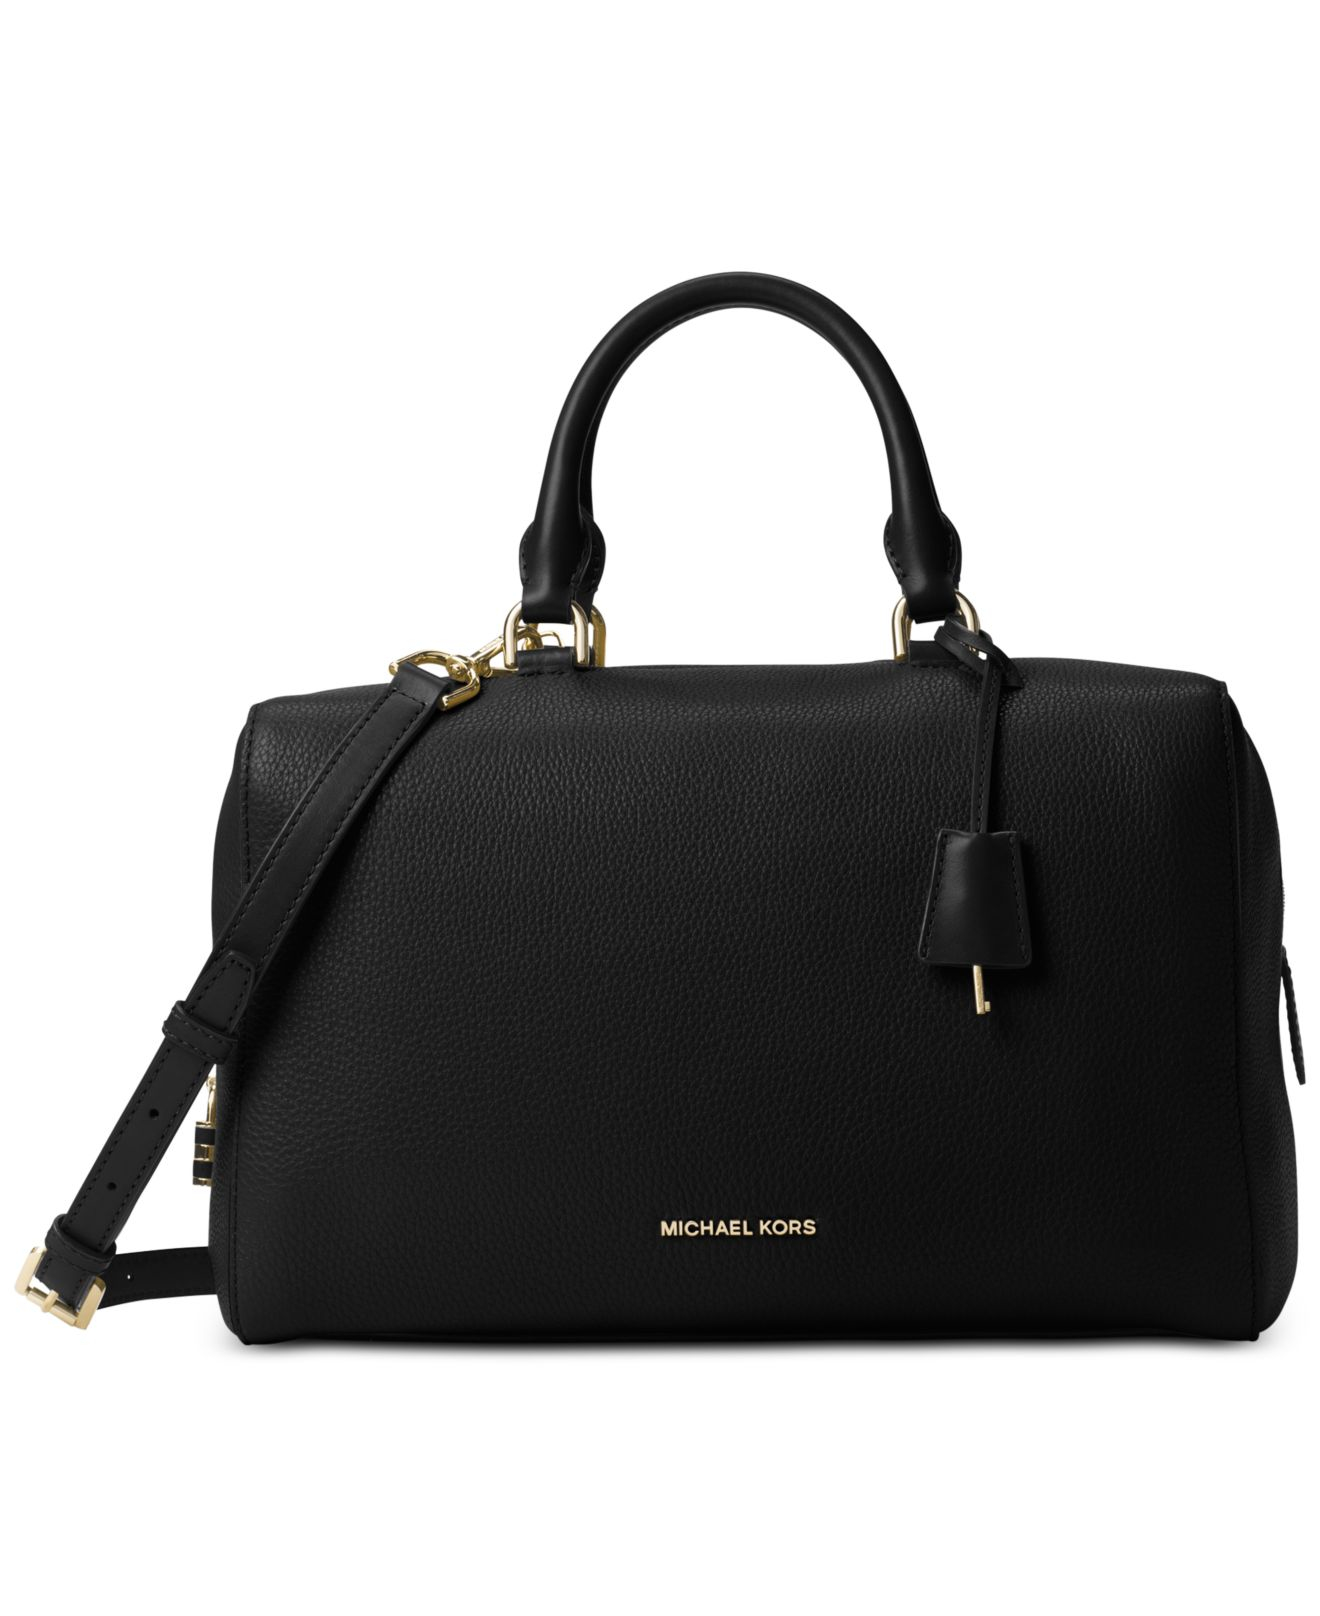 Michael Kors Black Handbag Macys | SEMA Data Co-op